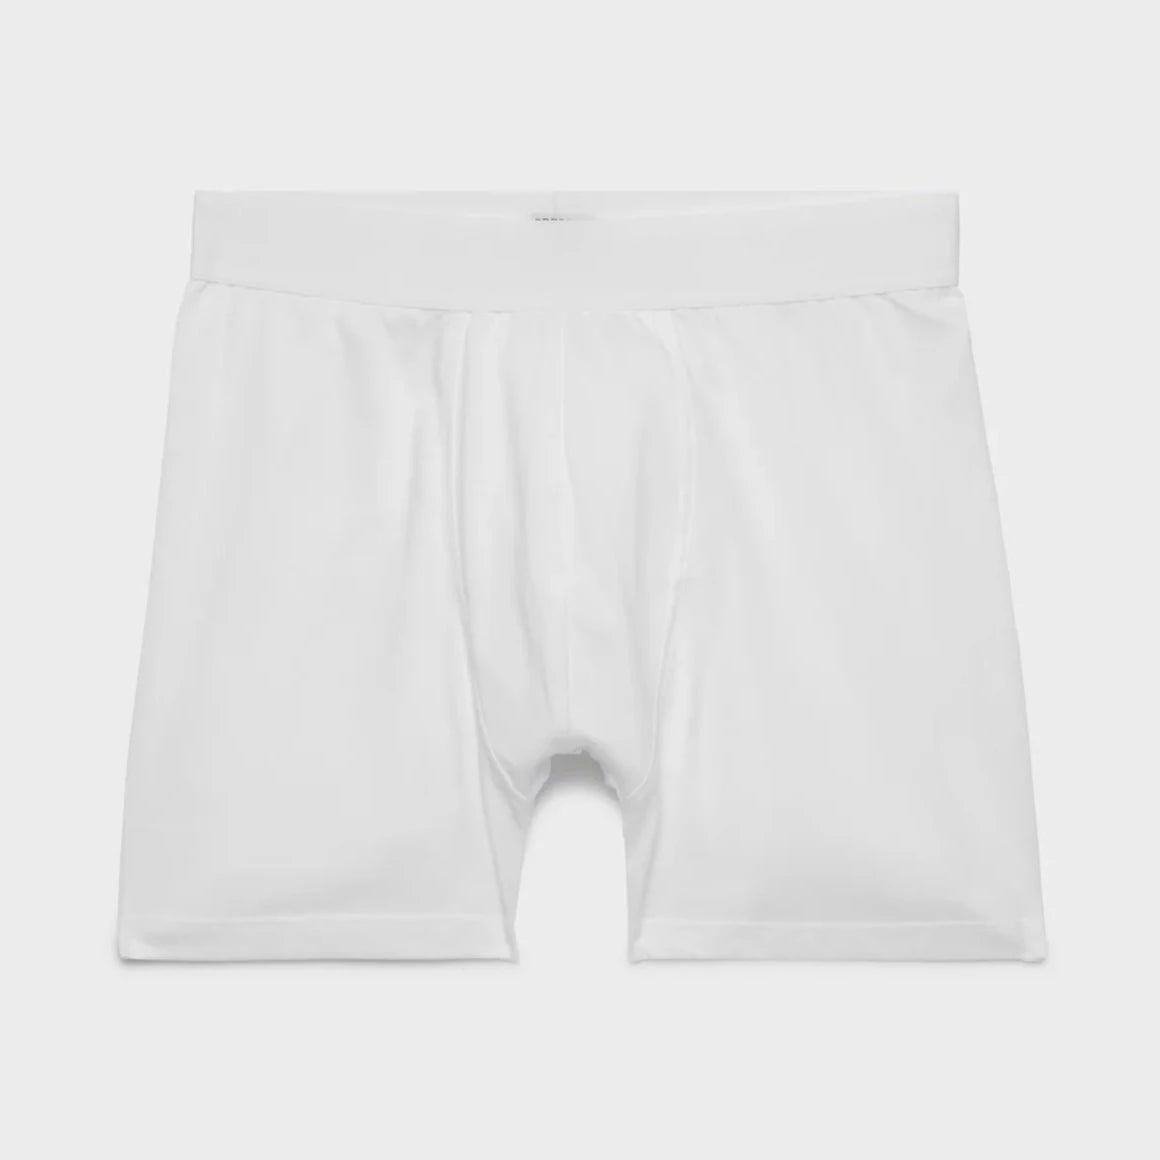 Bresciani 100% Cotton Knitted Boxer Shorts White